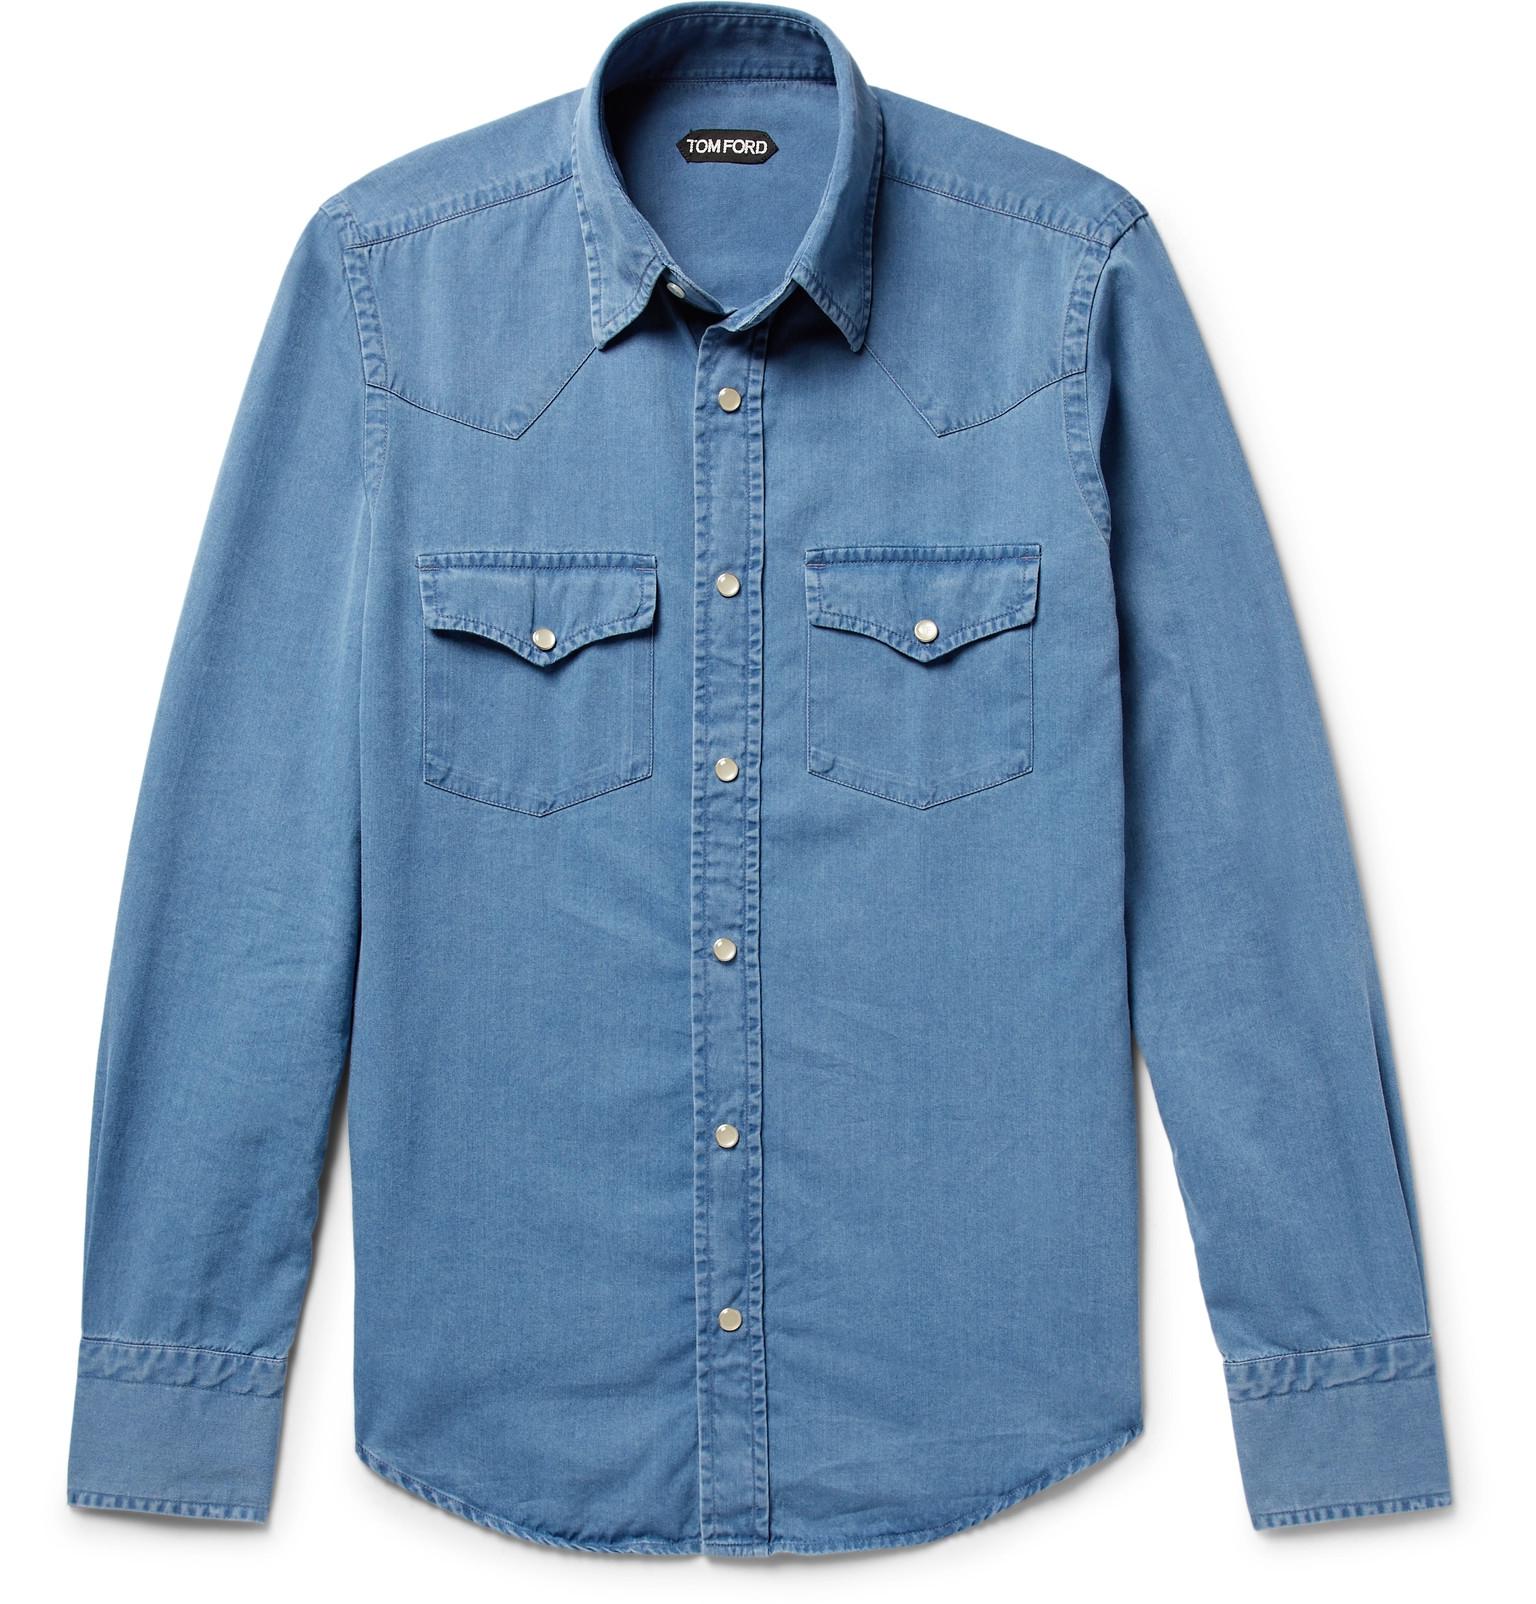 Tom Ford Micky Slim-fit Washed-denim Western Shirt in Blue for Men - Lyst